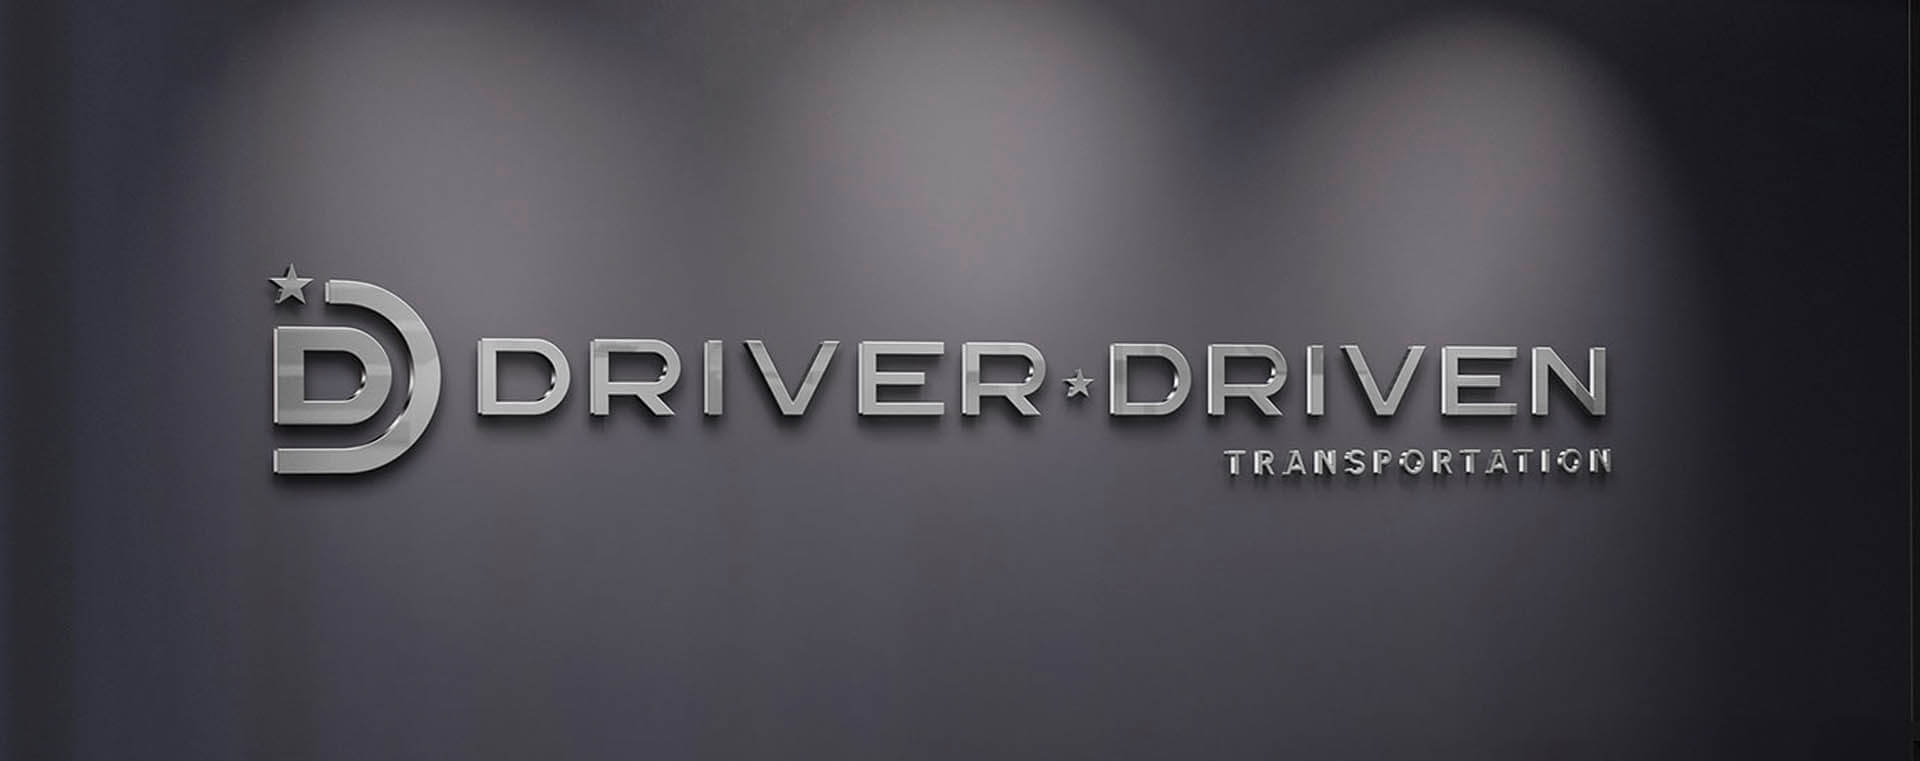 Driver Driven Transportation logo sign creation